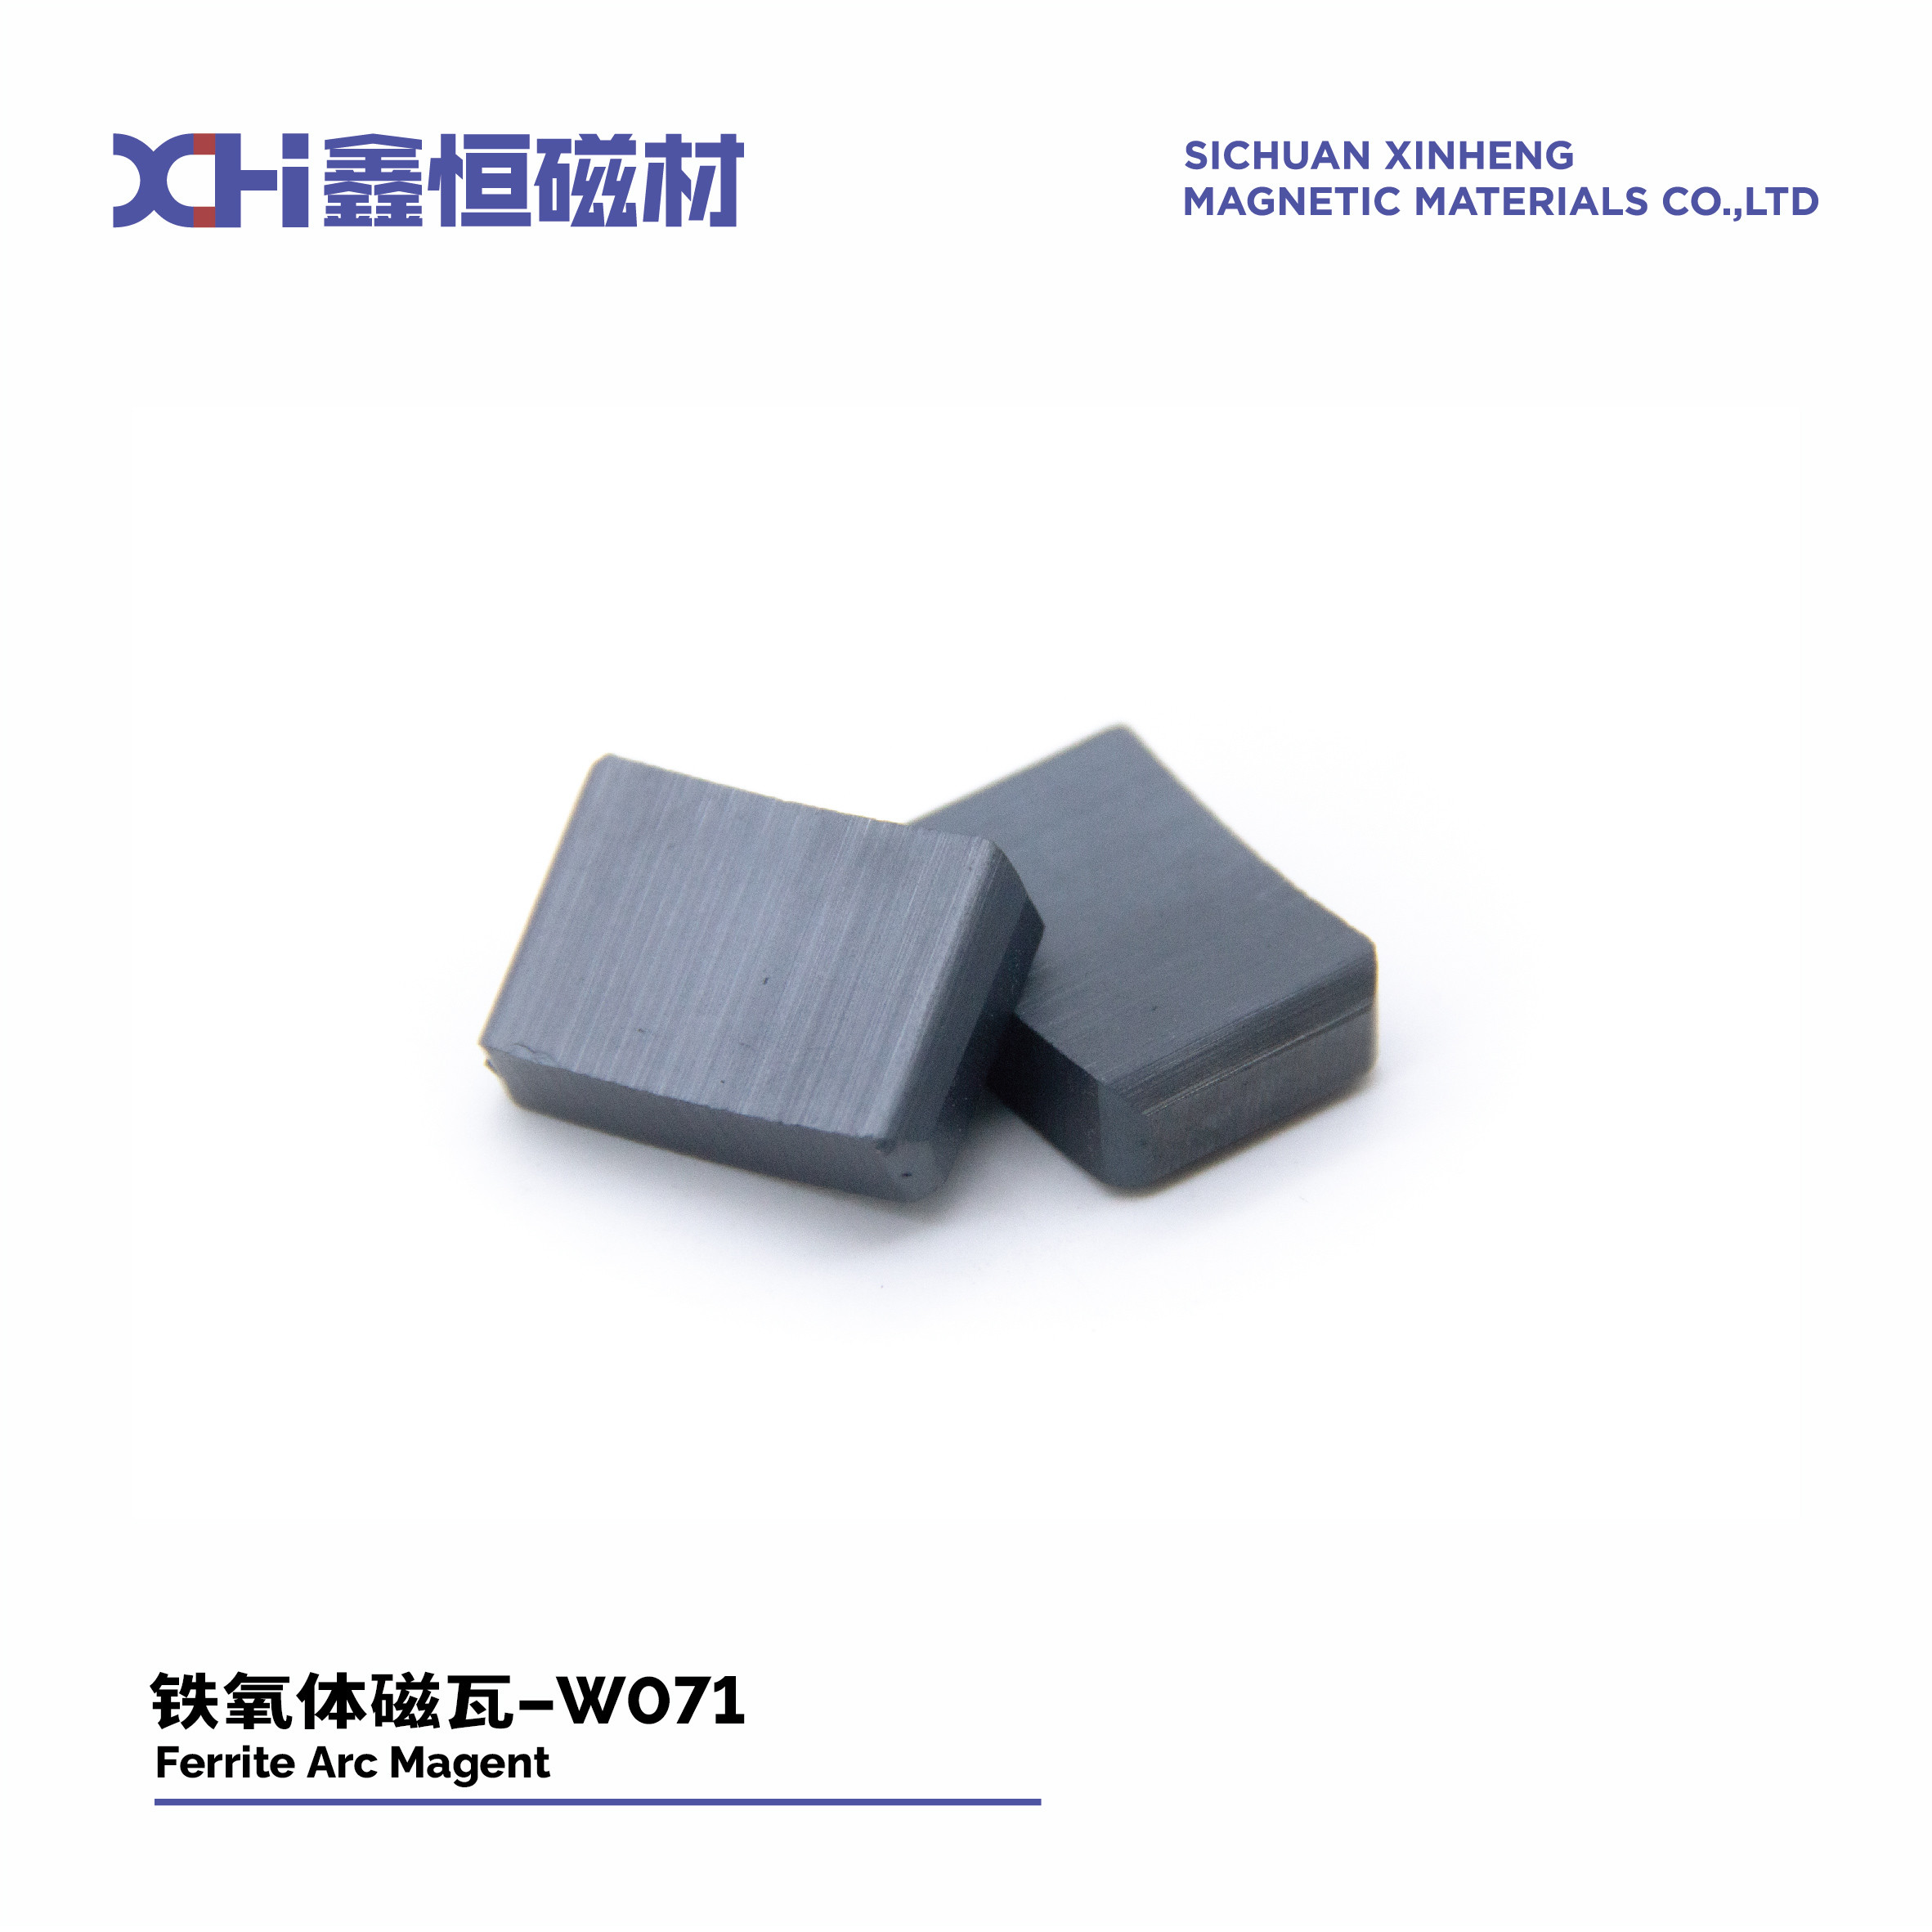 ISO9001 Certification Ferrite Permanent Magnet For Ceiling Fan Motor W1071